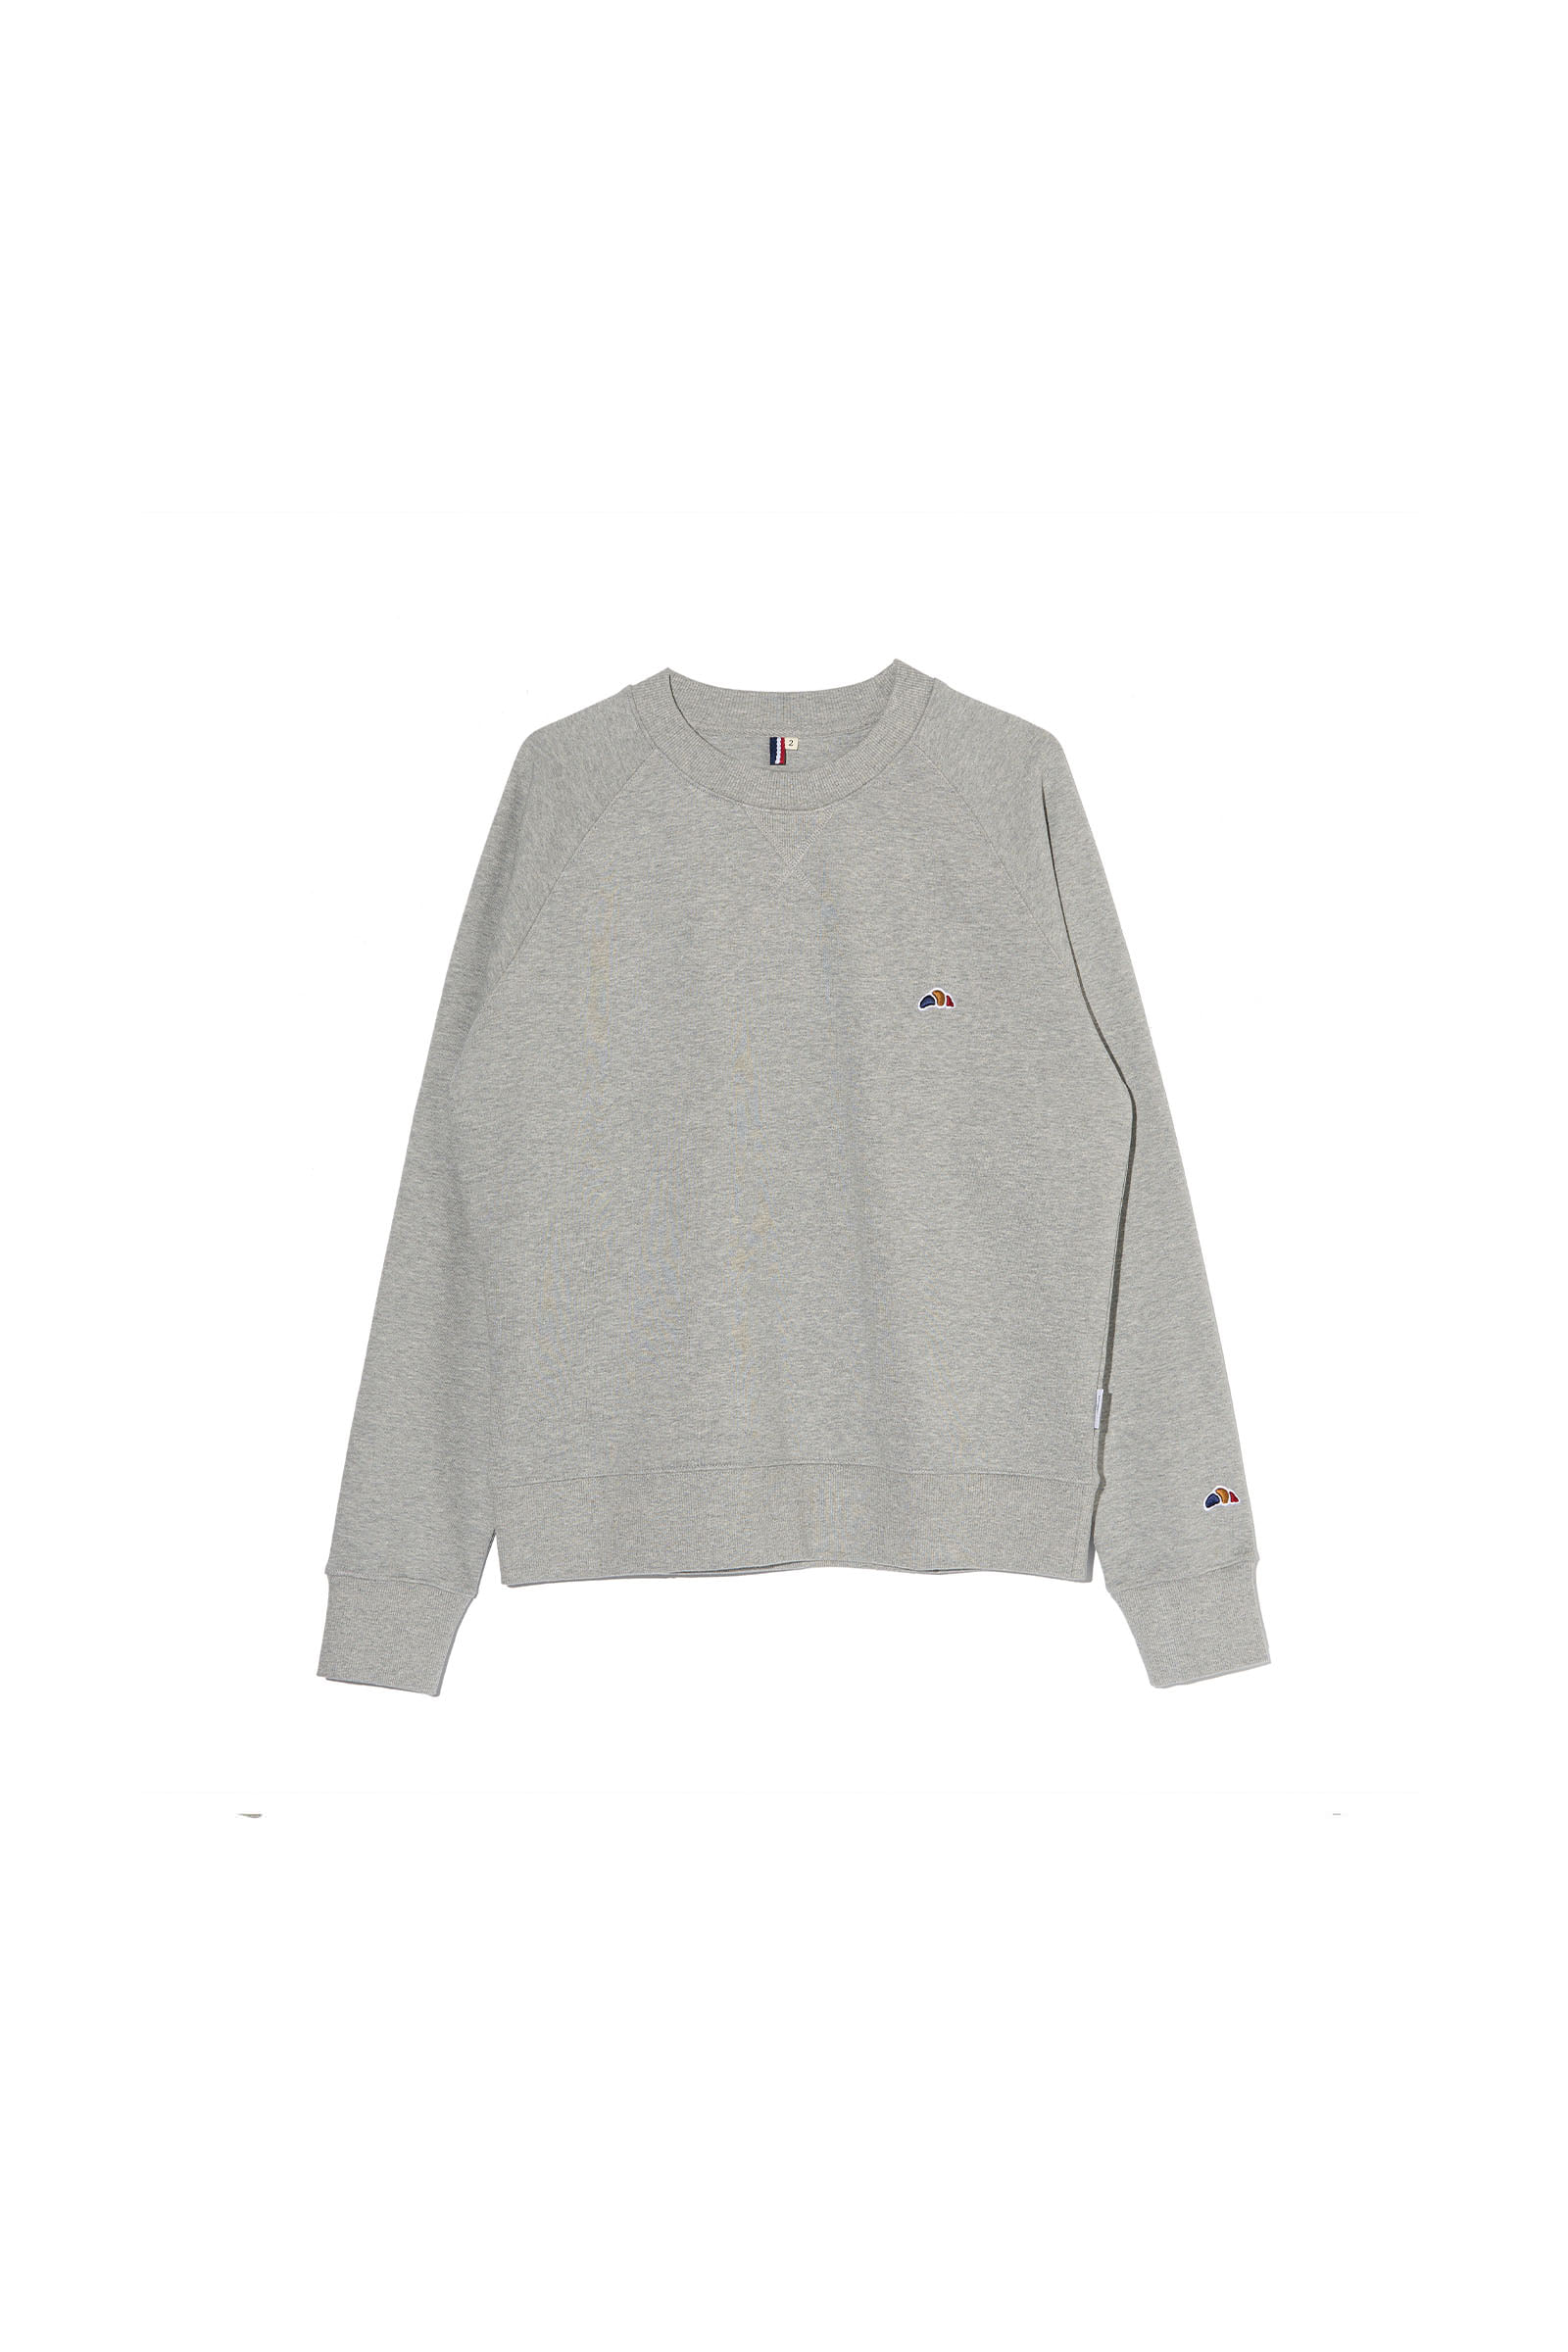 ep.6 Croissant symbol sweatshirts (Grey)